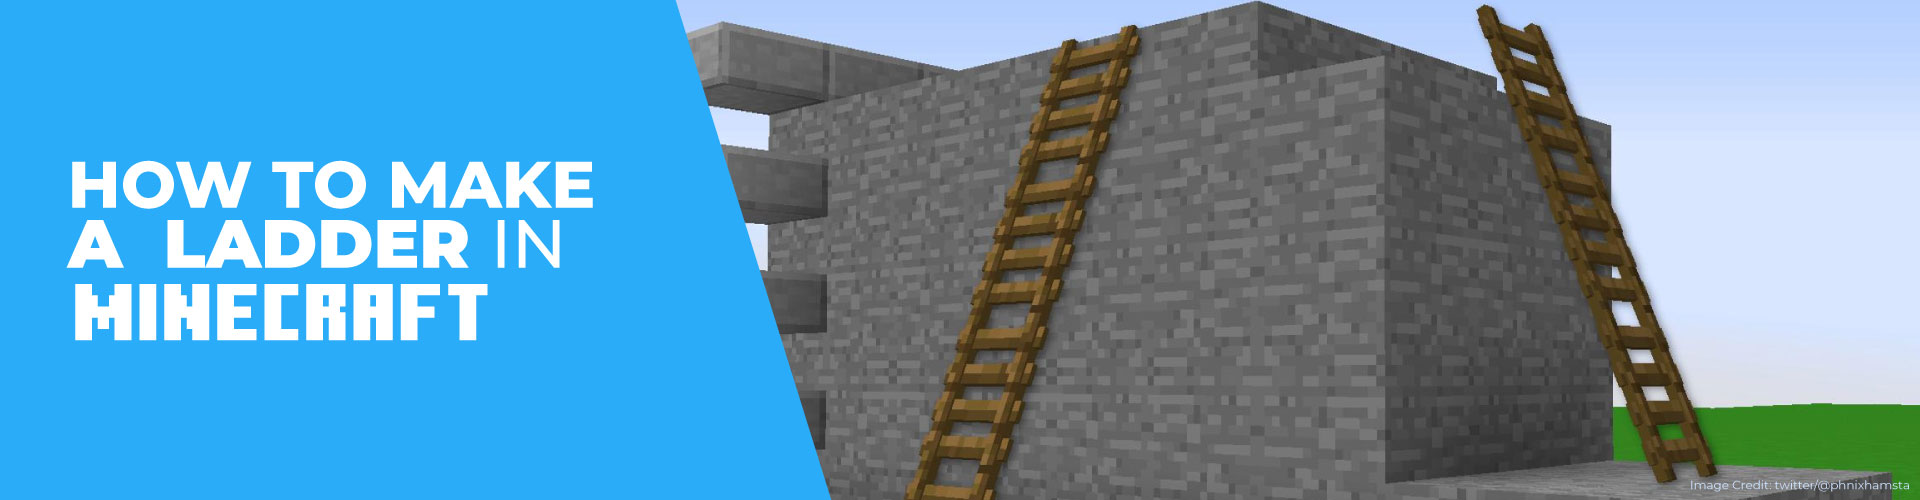 How To Make Ladder In Minecraft